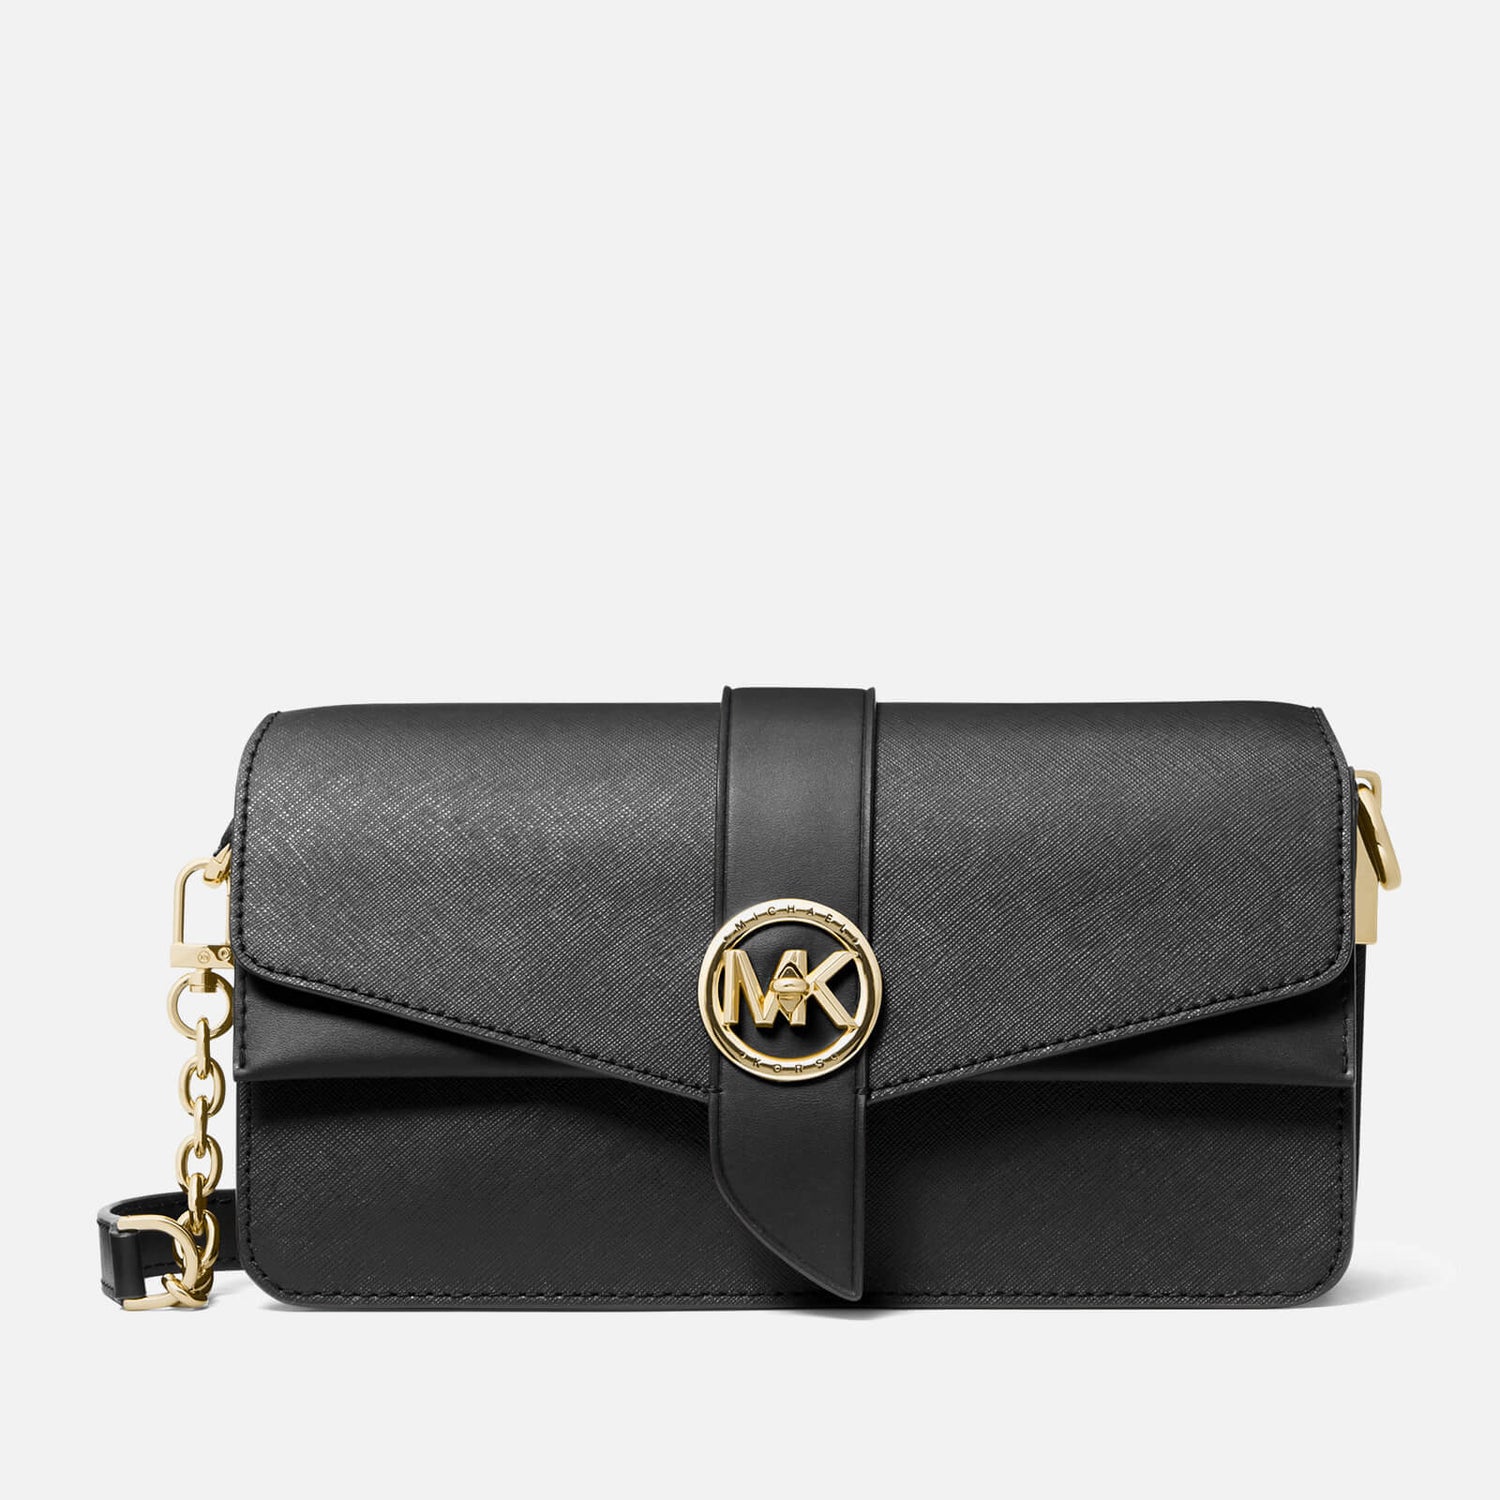 MICHAEL Michael Kors Women's Greenwich Medium Convertible Shoulder Bag - Black